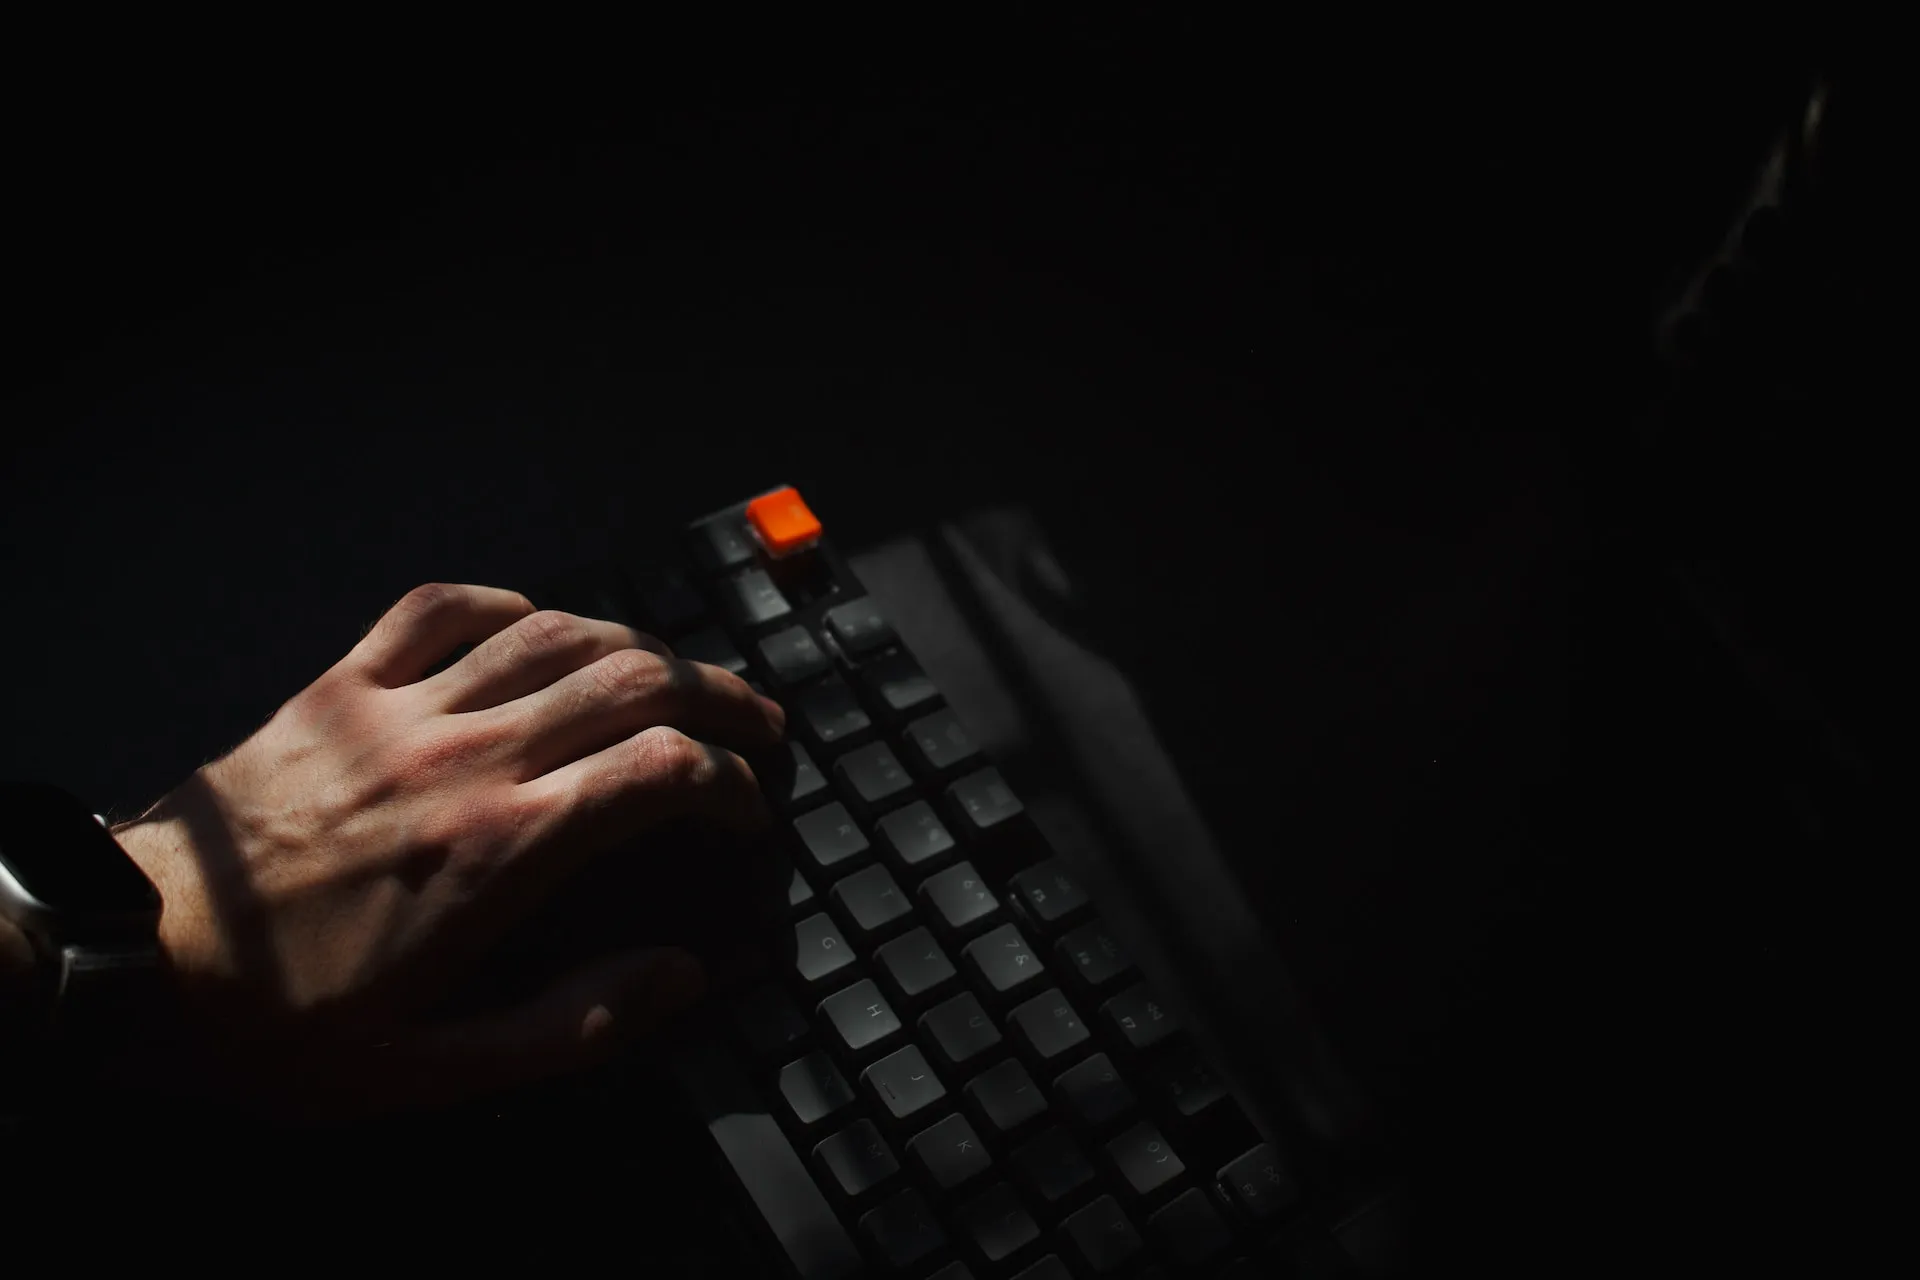 A hand typing on a dark keyboard